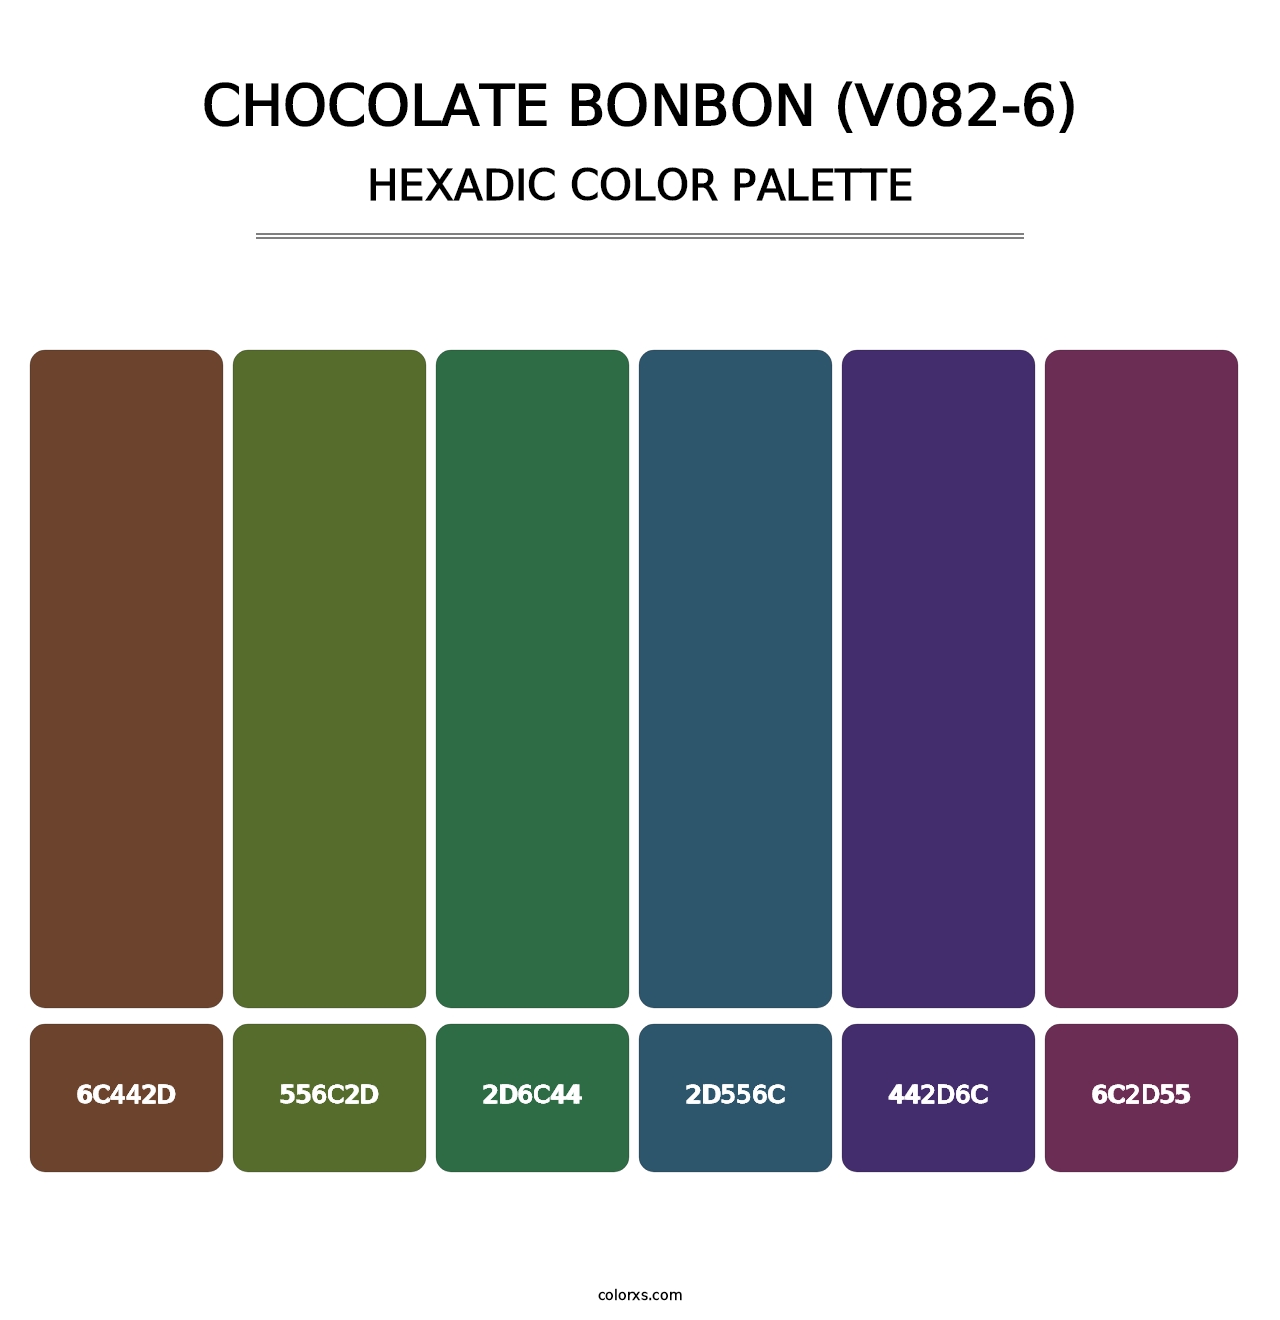 Chocolate Bonbon (V082-6) - Hexadic Color Palette